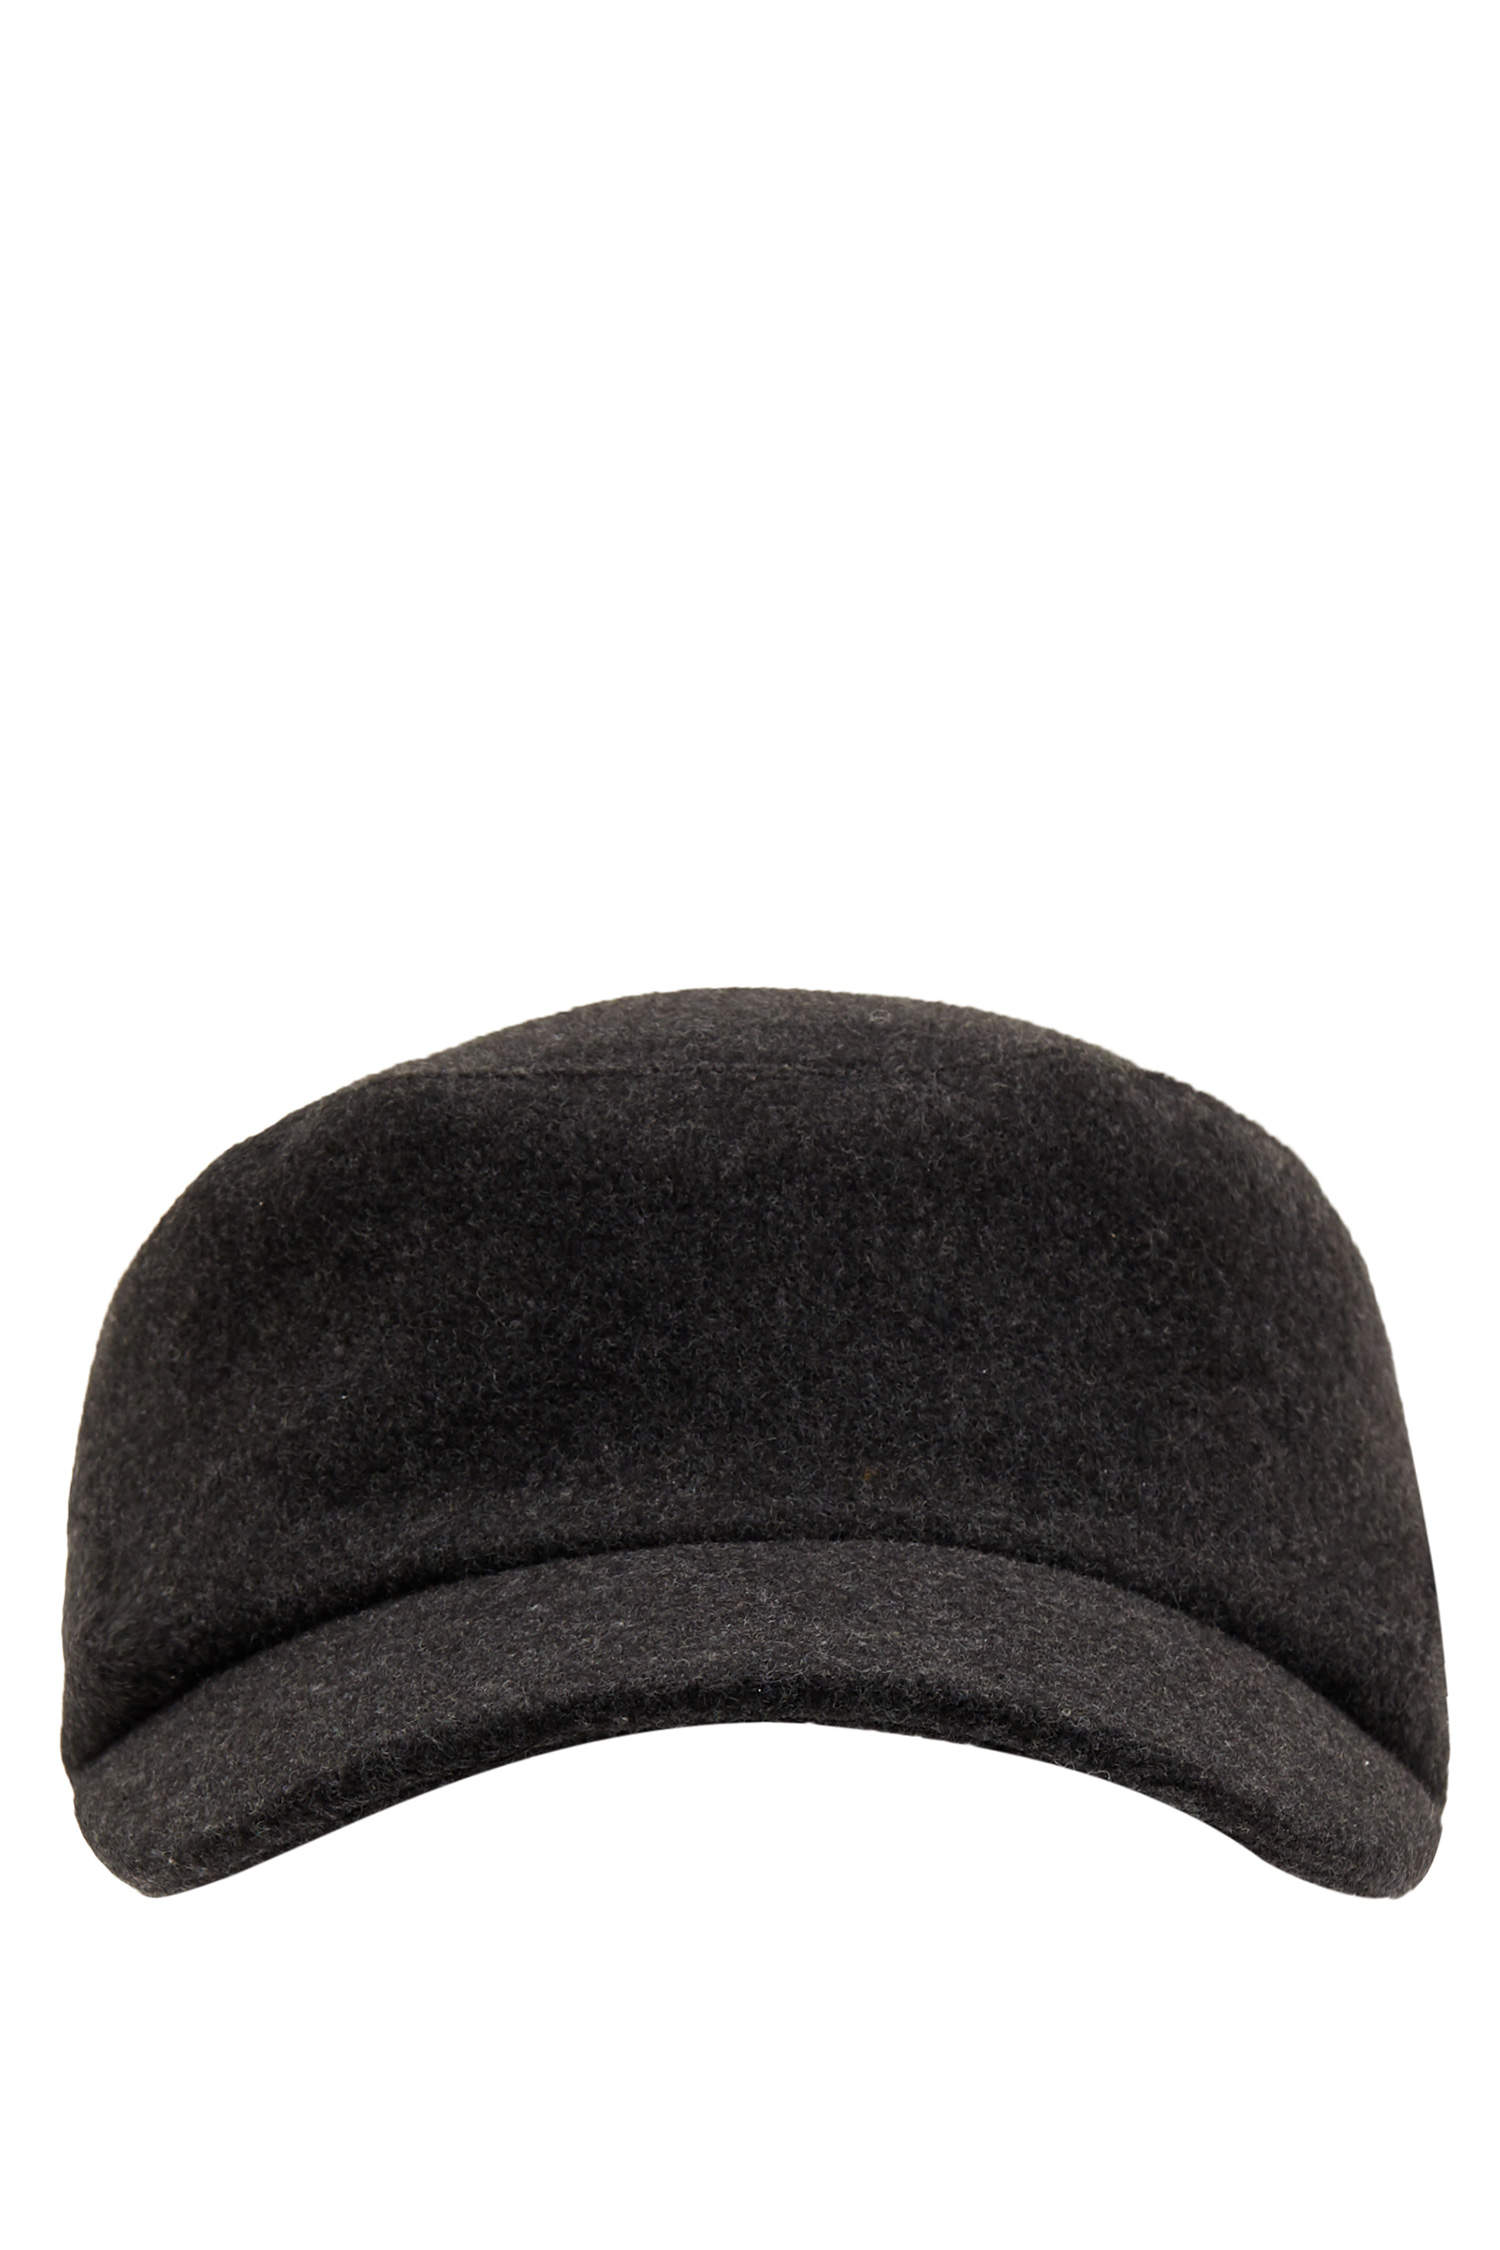 Defacto Erkek Kışlık Cap Şapka. 1